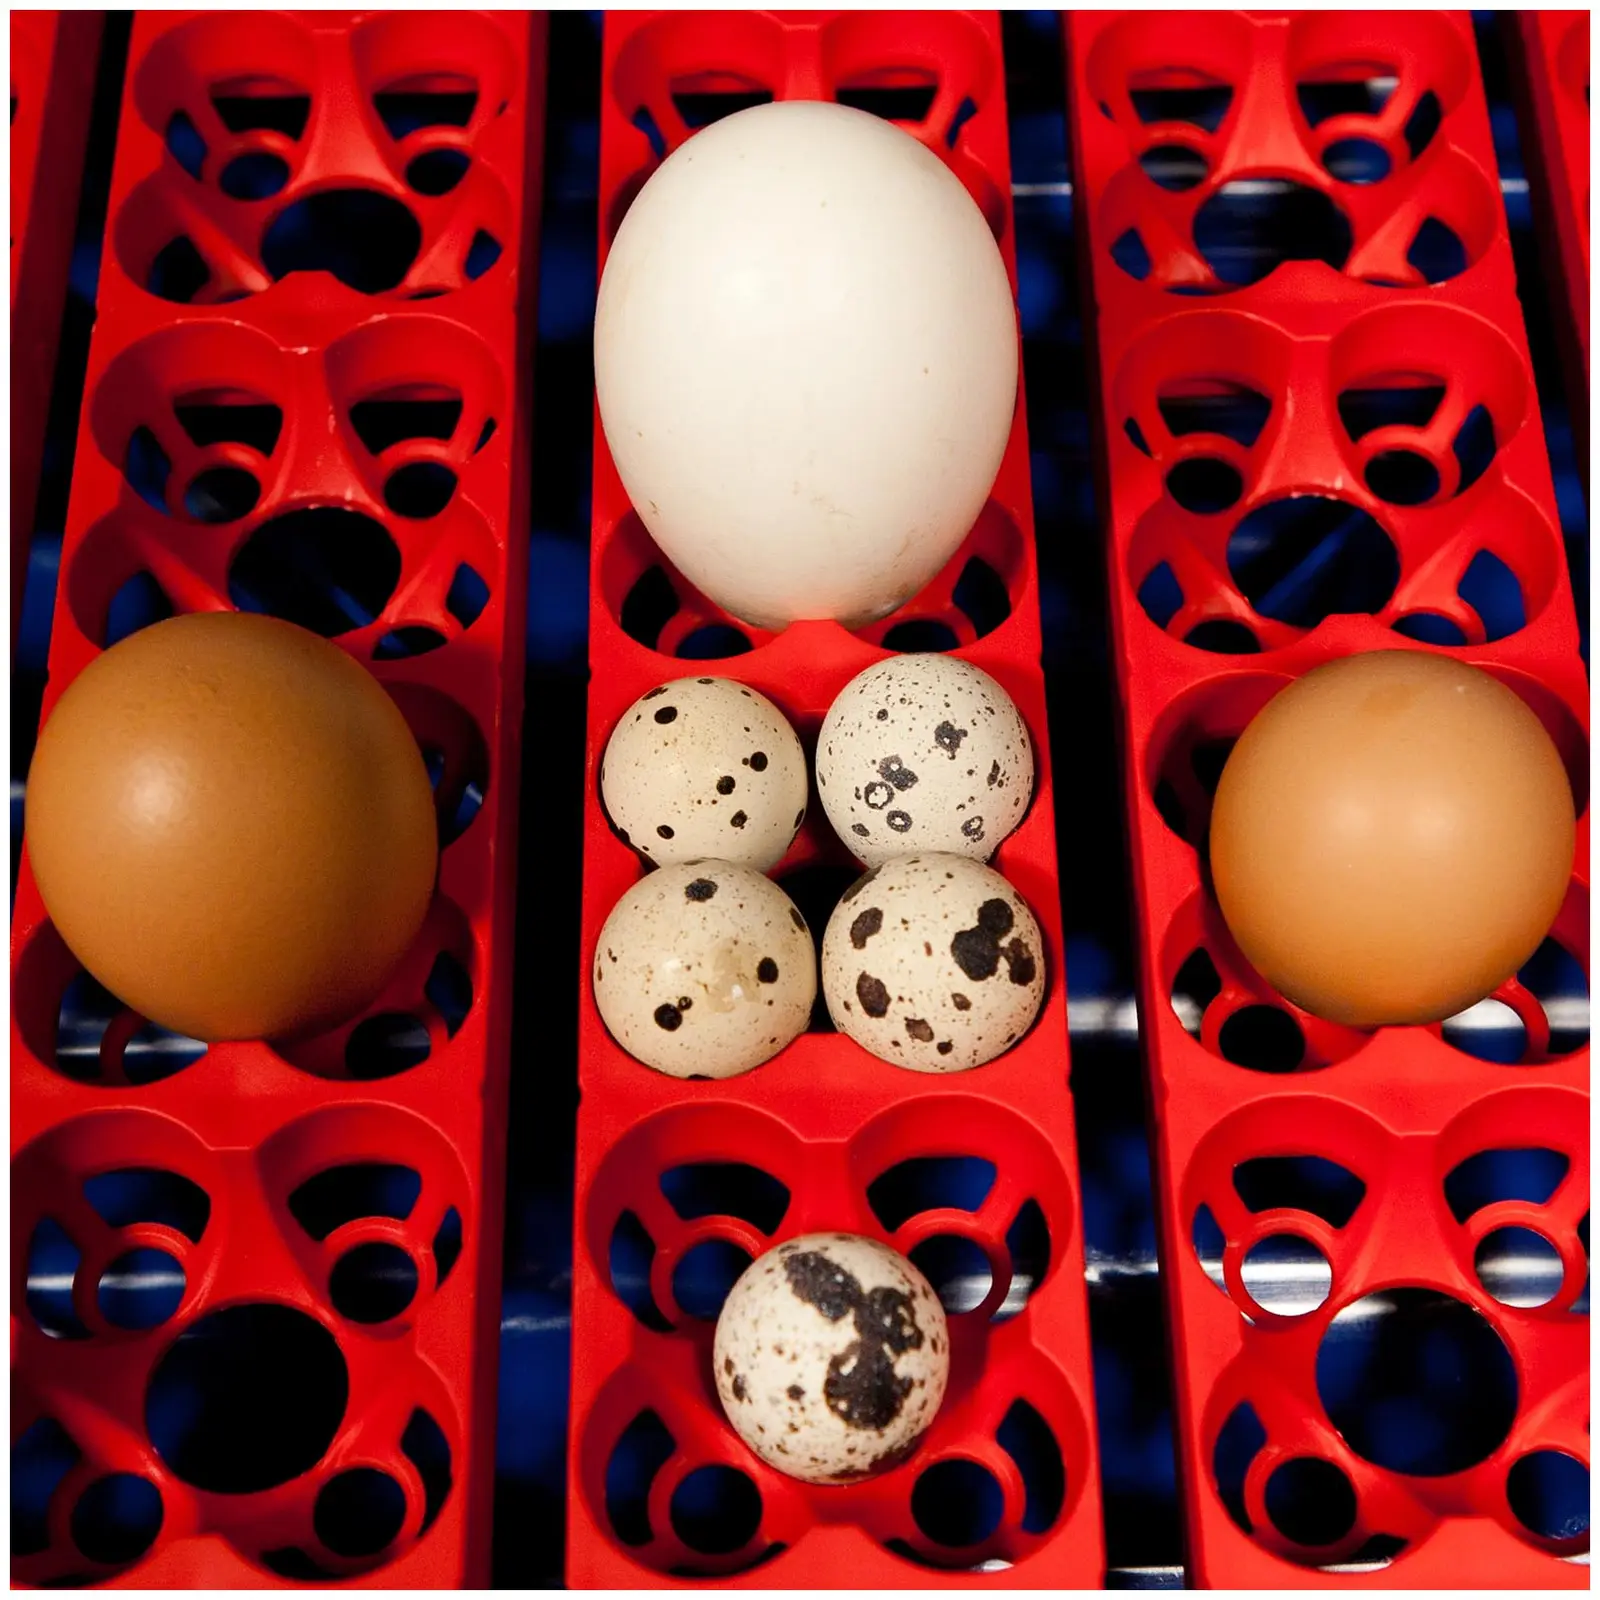 Incubator - 24 eggs - semi-automatic